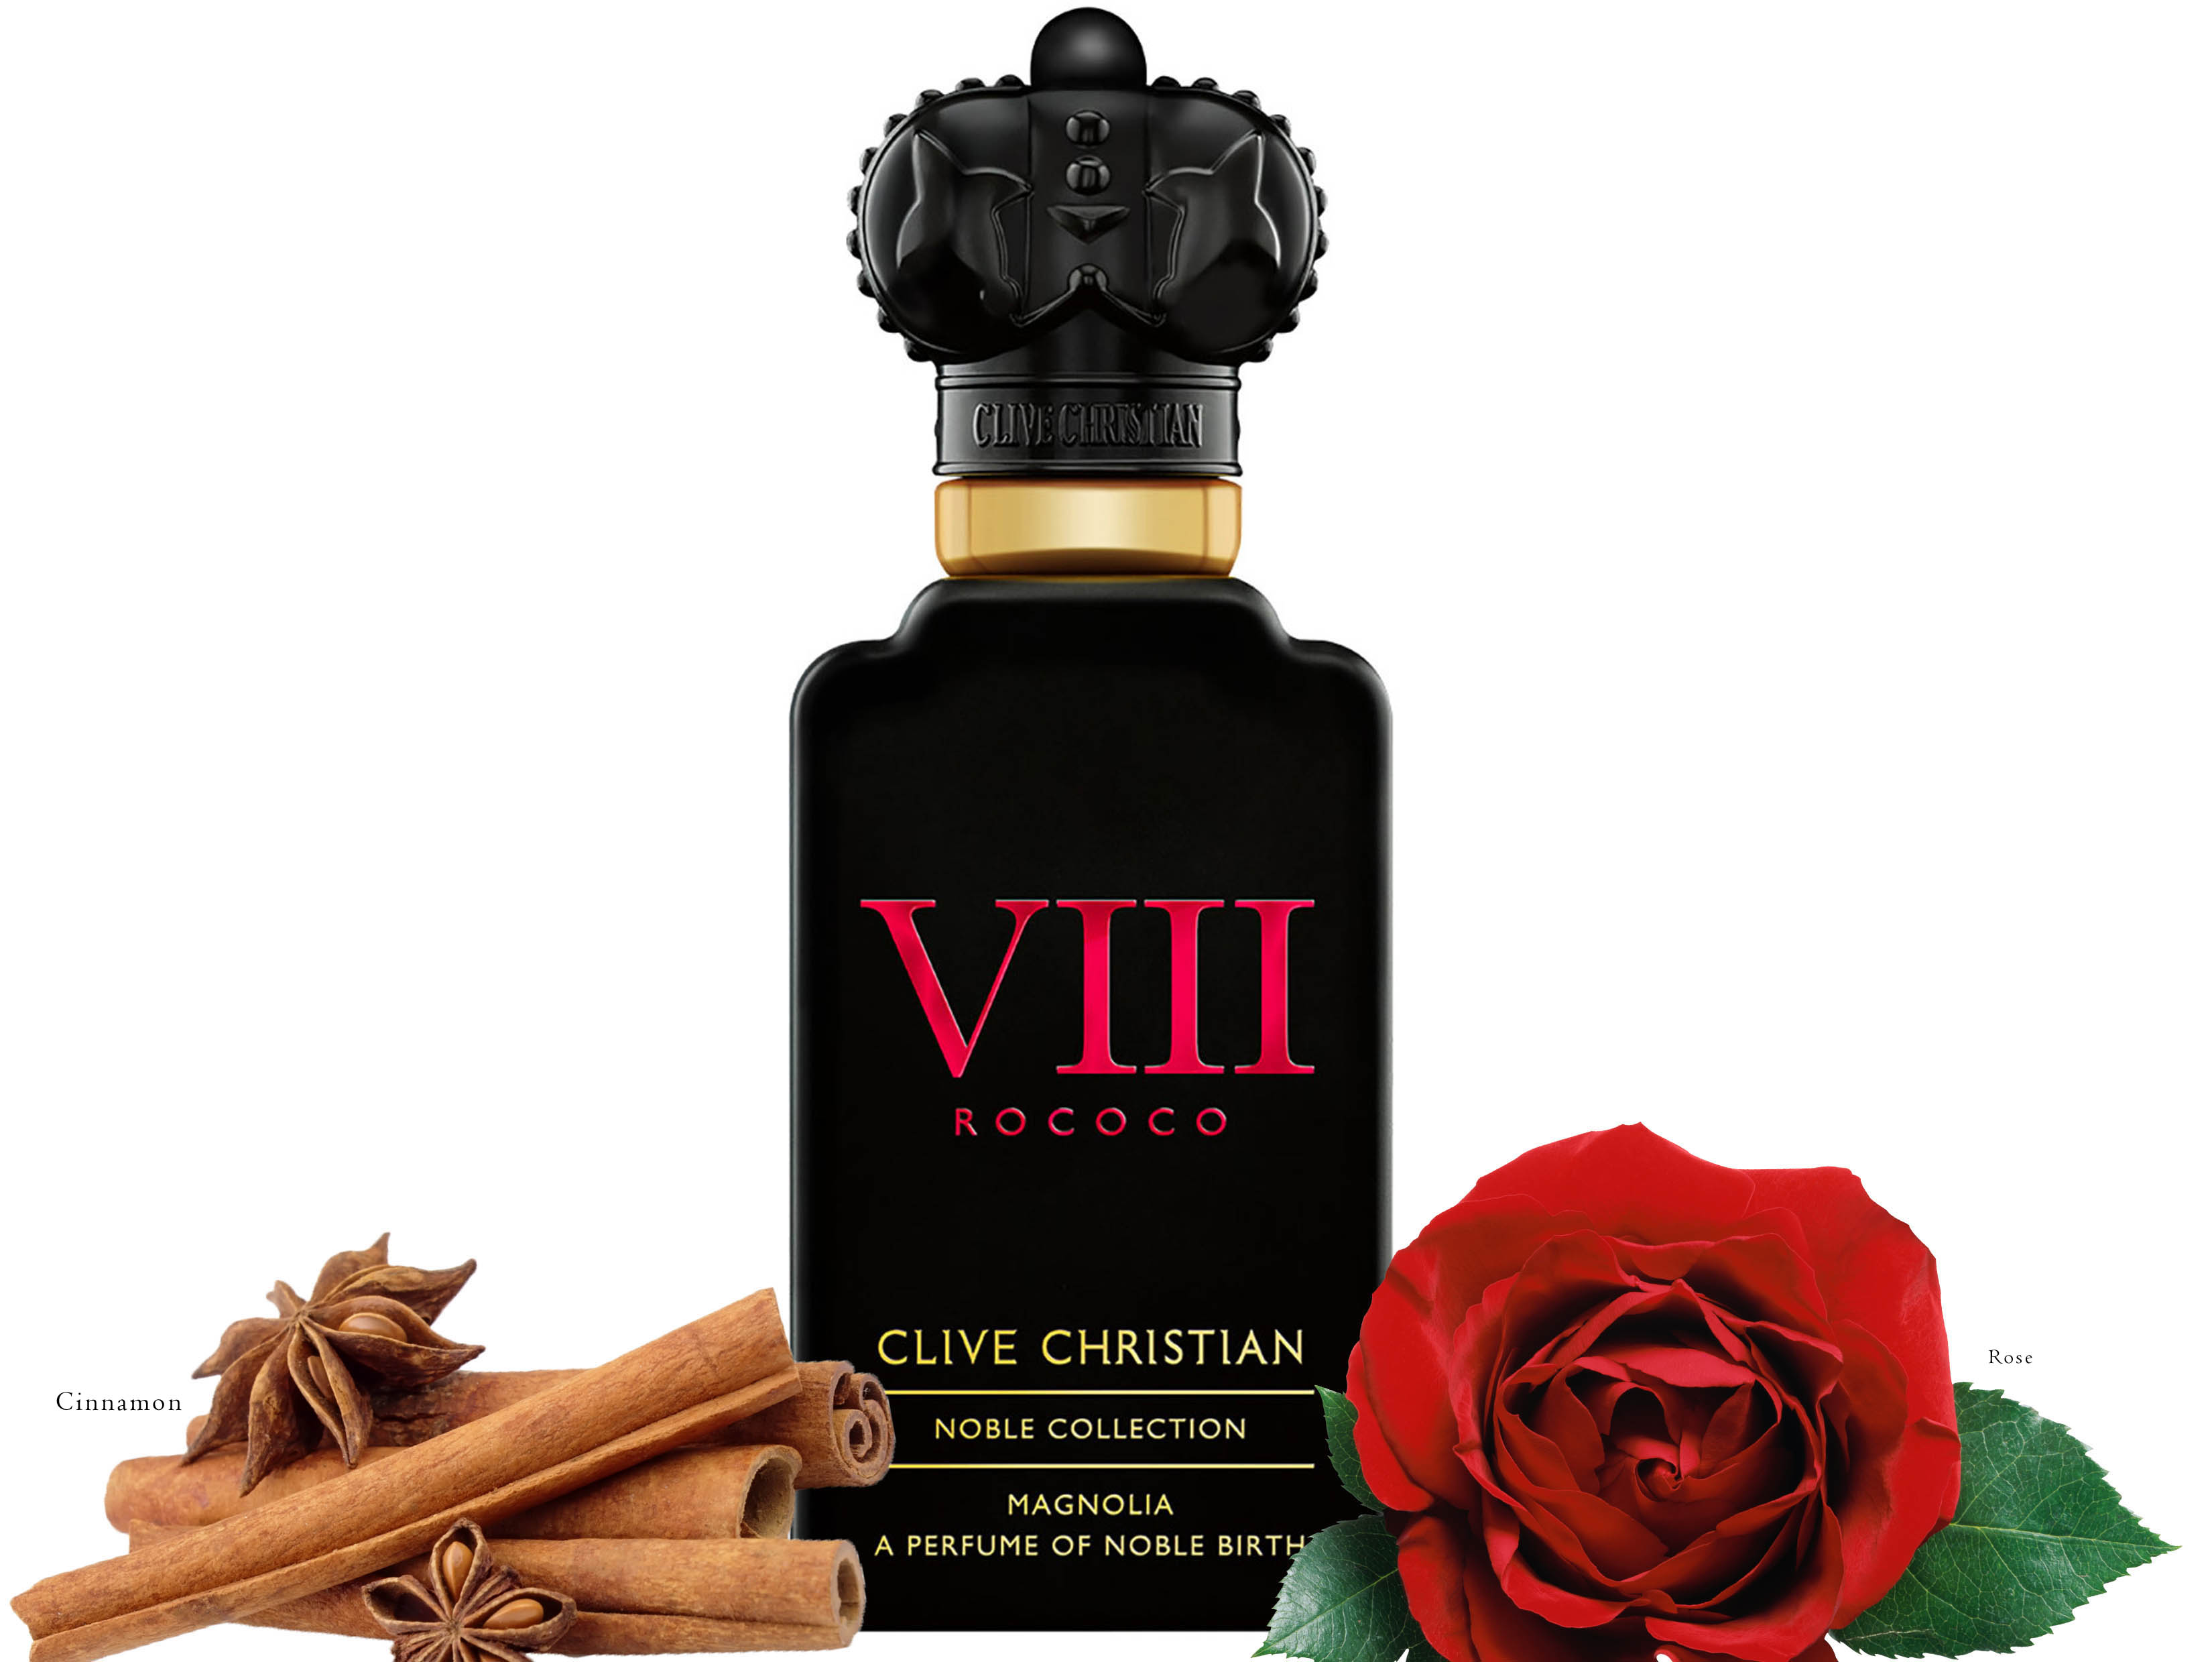 Clive Christian magnolia fragrance